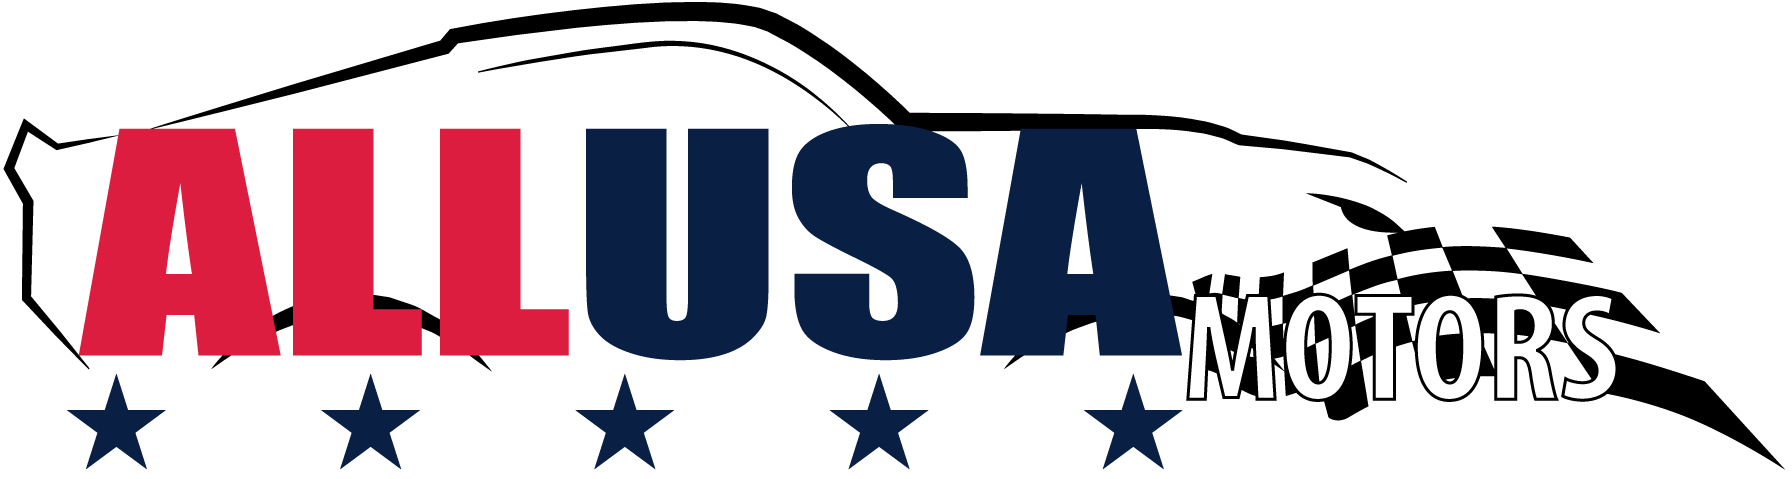 All USA Motors logo - Used Car Dealership San Jose